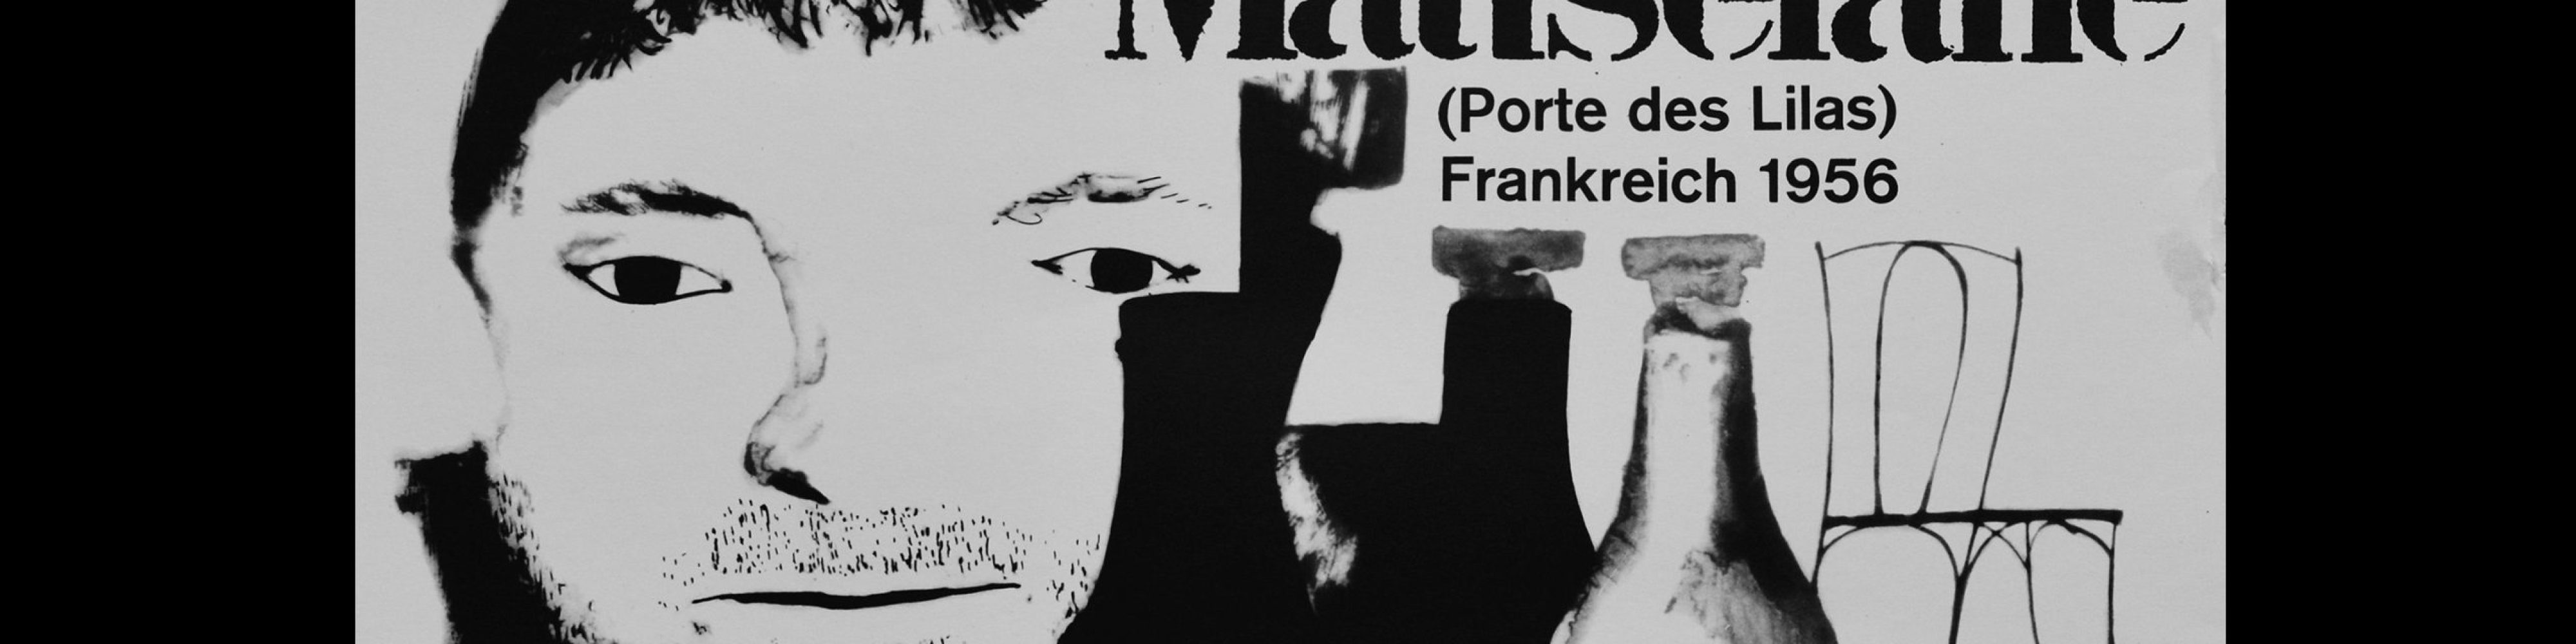 Die Mausefalle, Atlas Films Poster, 1960s. Designed by Karl Oskar Blase